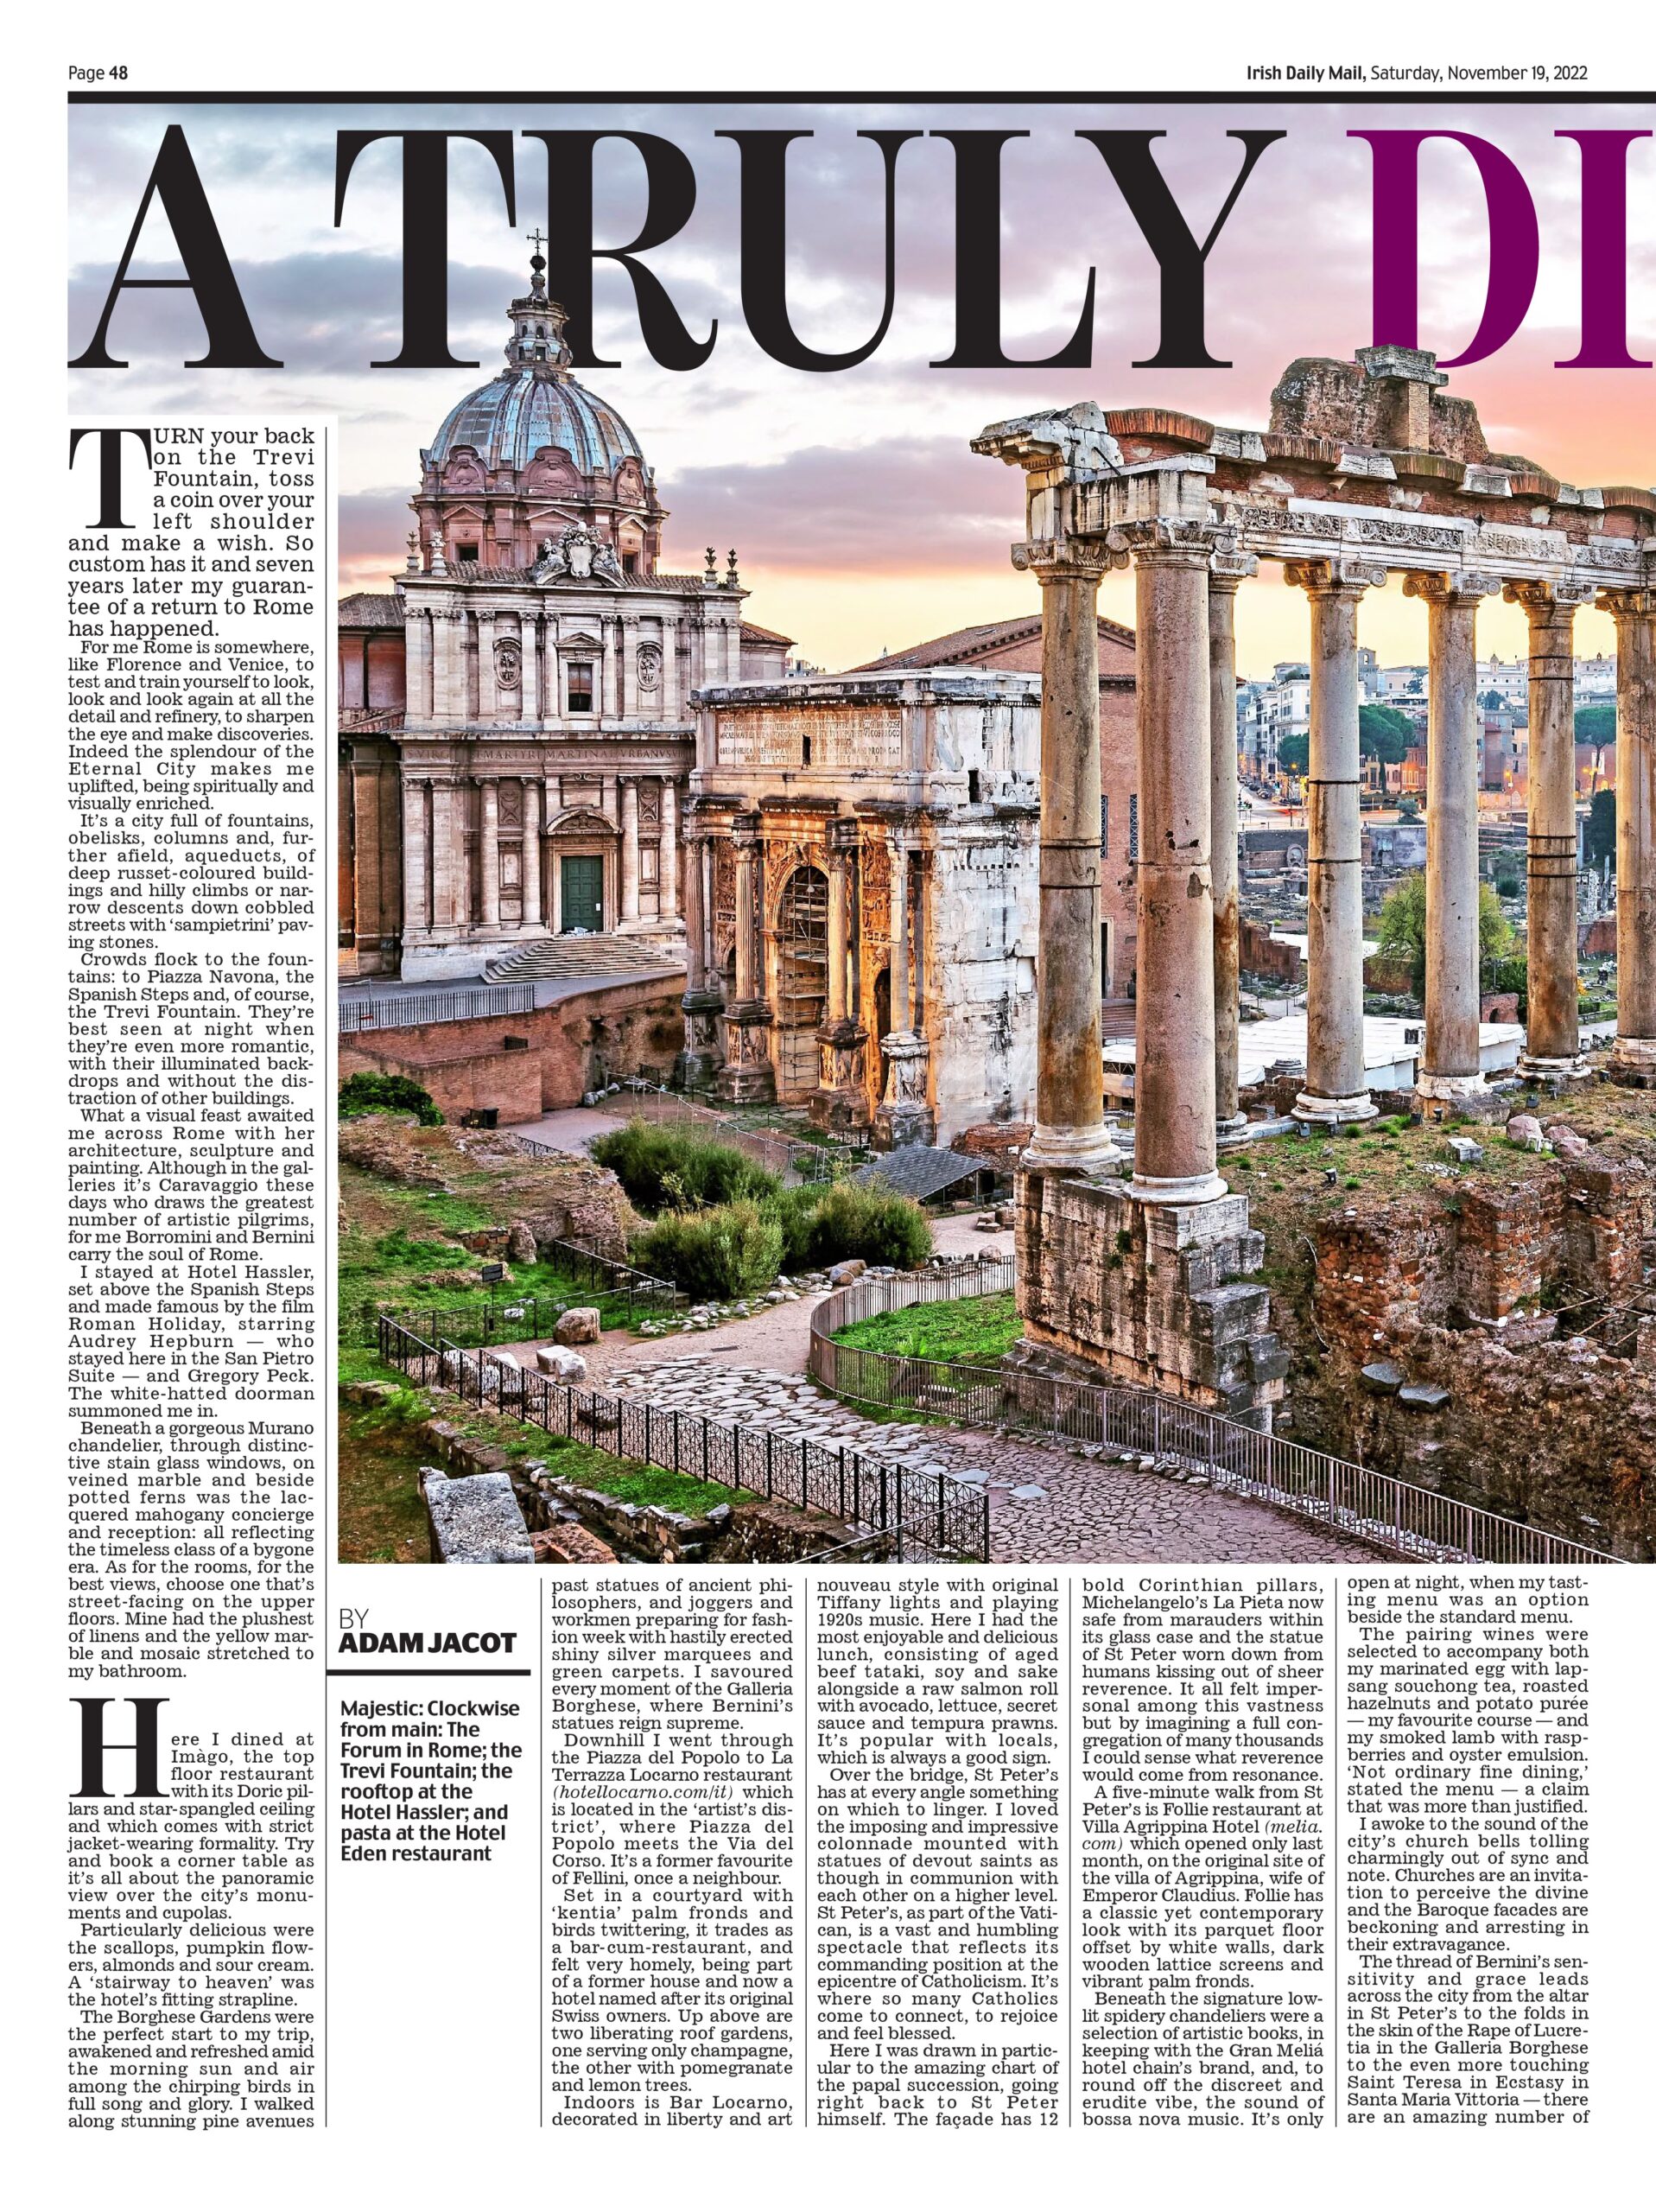 Irish Daily Mail Rome feature